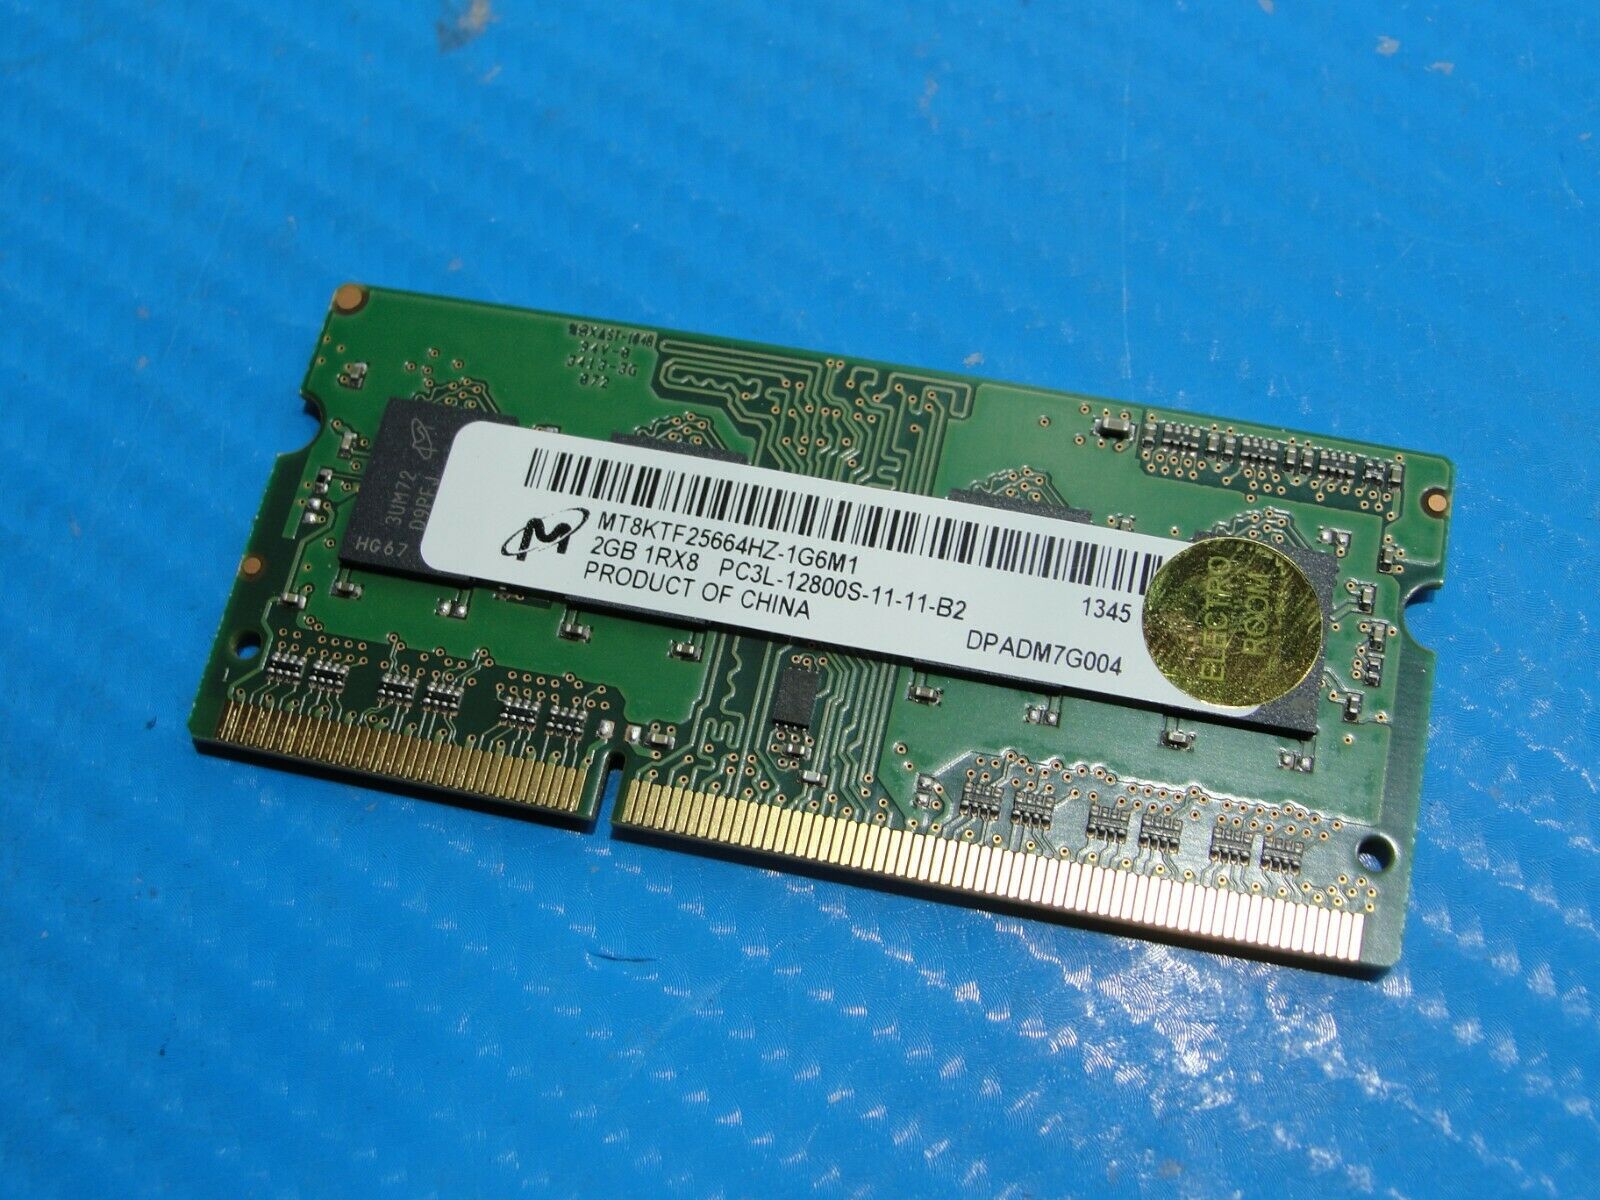 Dell 15.6 15R-5537 Micron SO-DIMM RAM Memory 2GB PC3L-12800S MT8KTF25664HZ-1G6M1 Micron